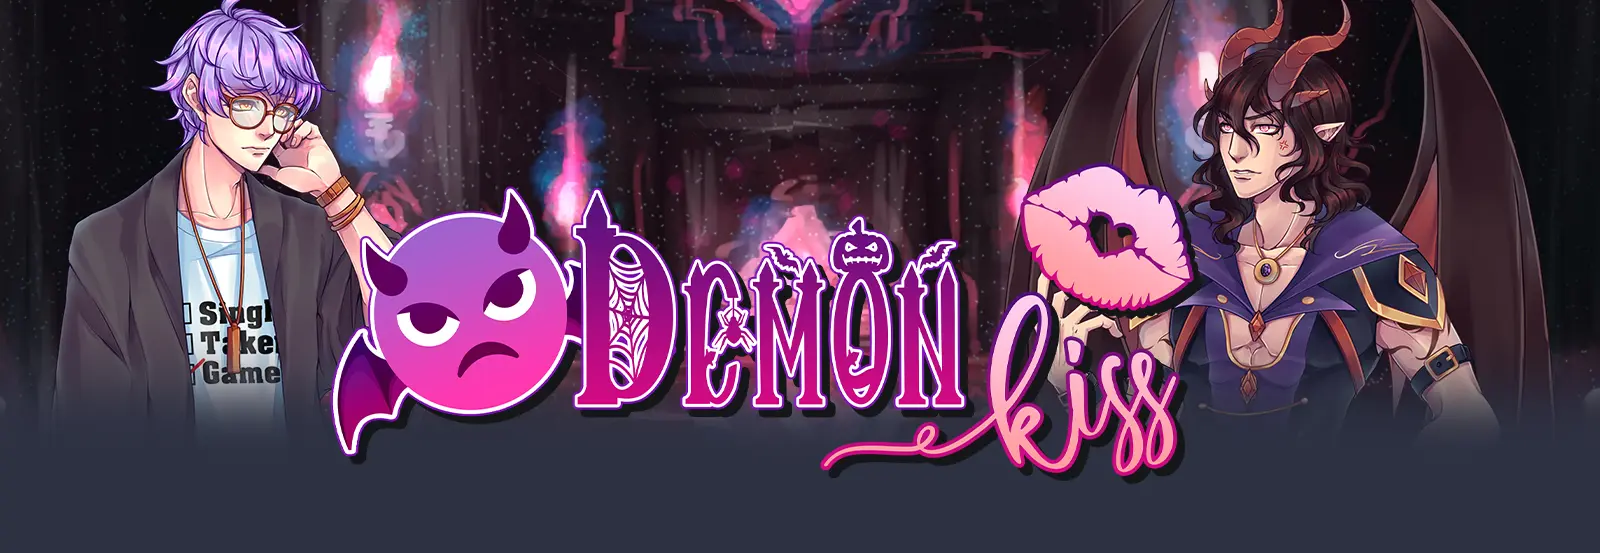 Demon Kiss [v1.0] main image